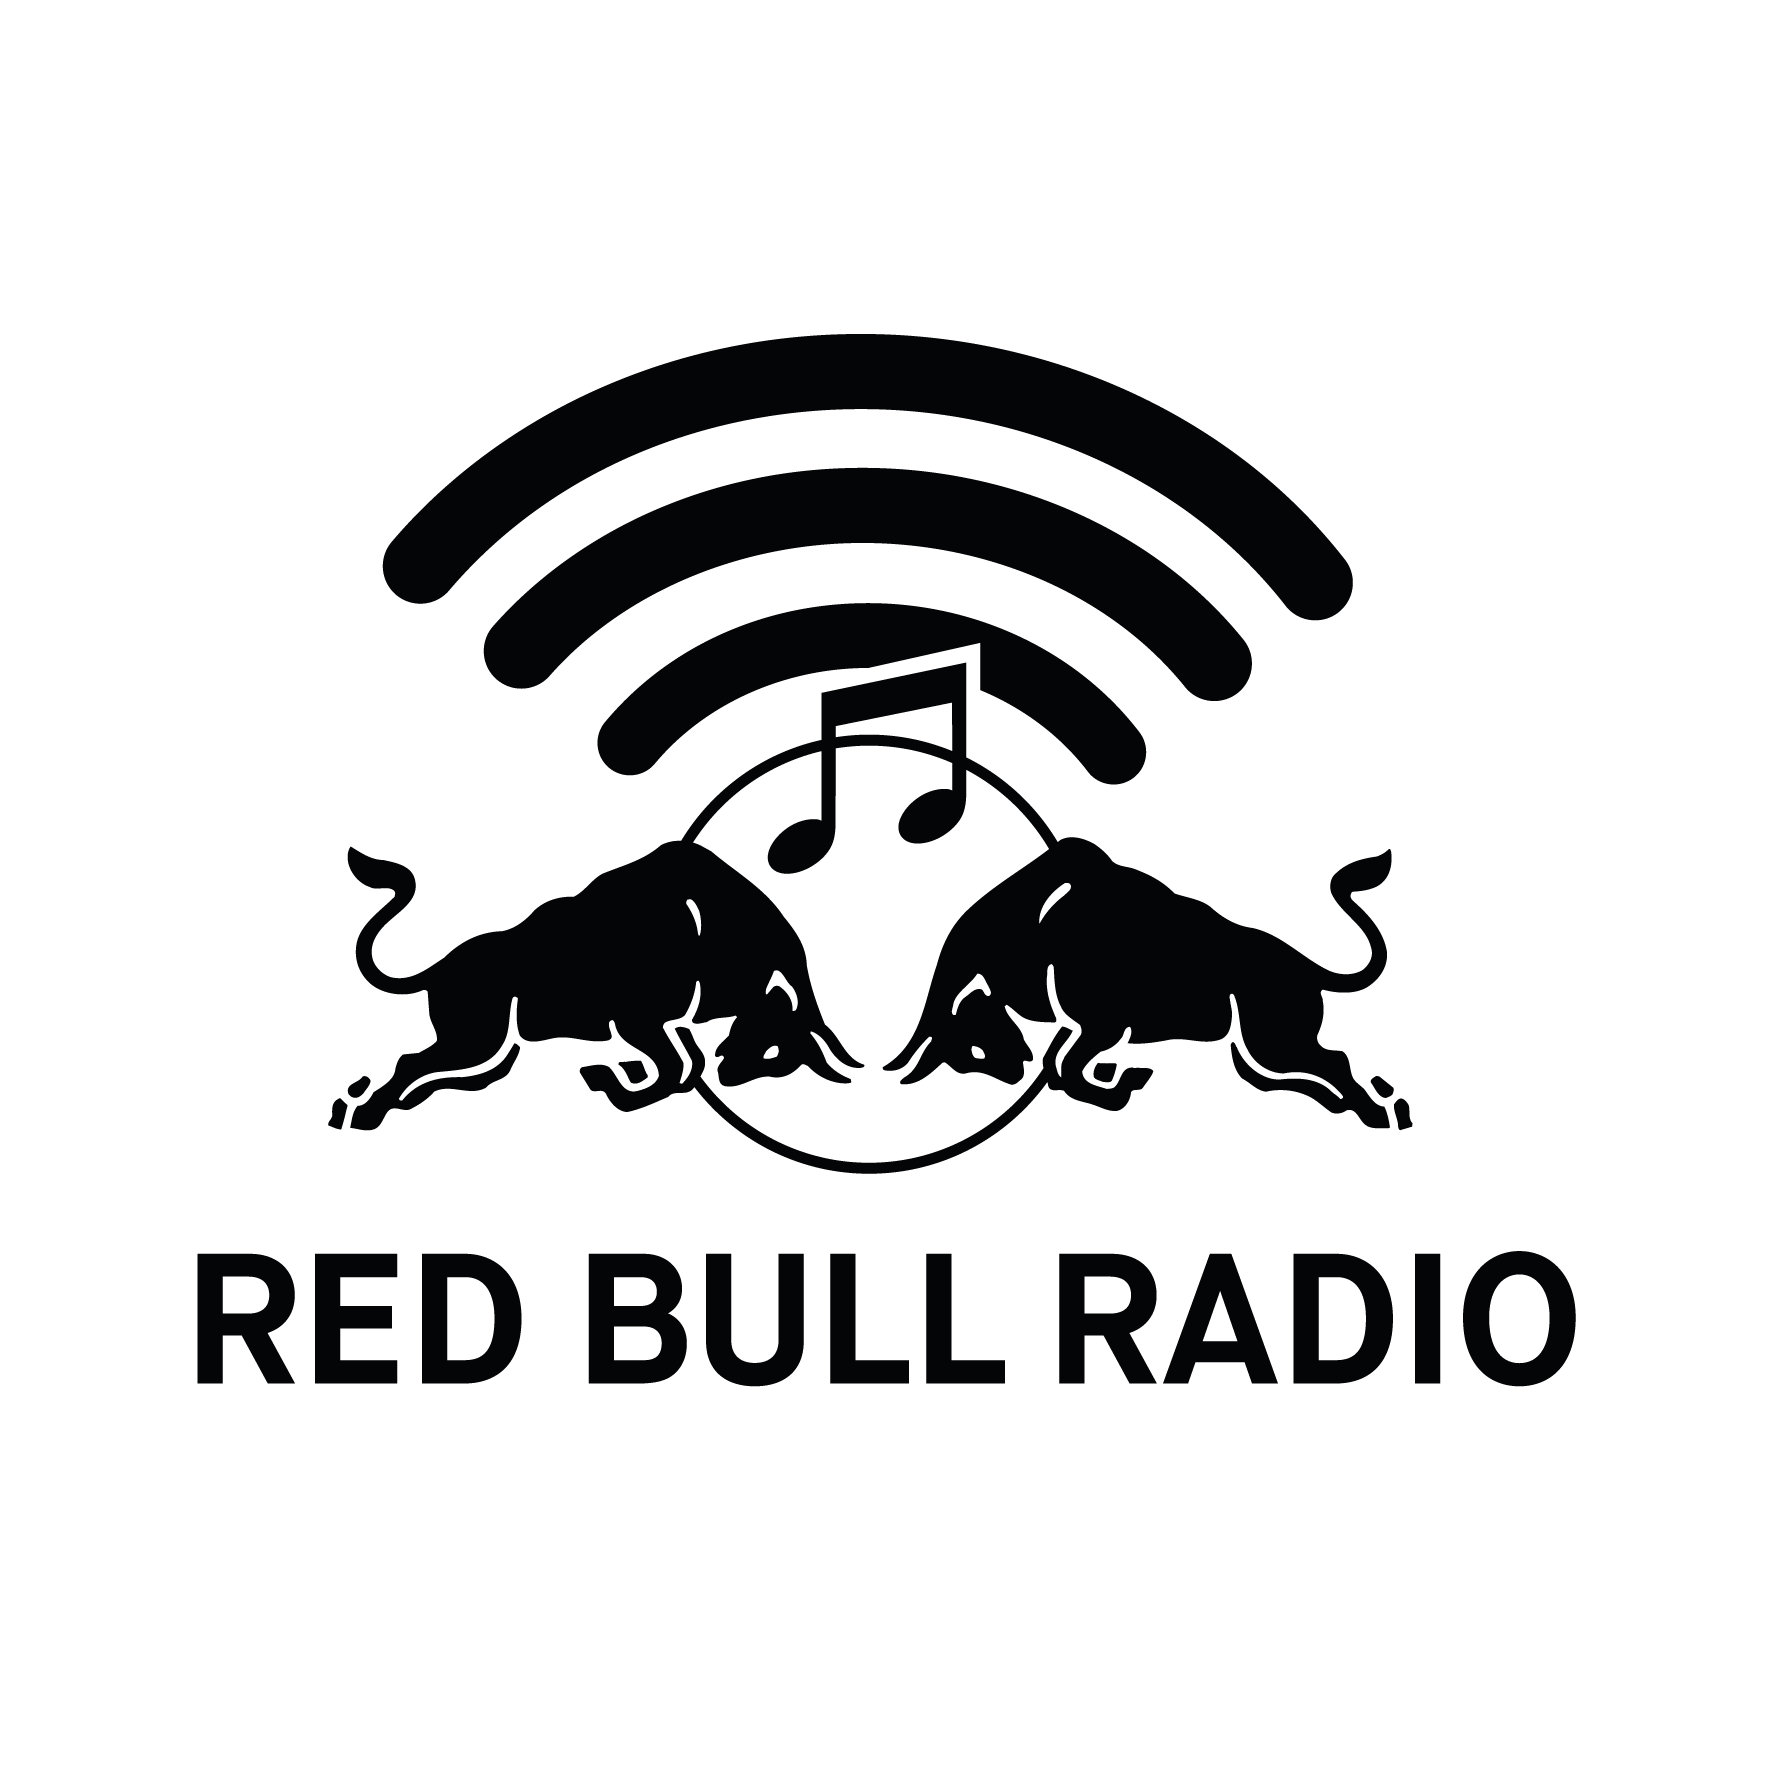 Black White and Red Bull Logo - Energy Drink Bull Products & Company - Energy Drink - Red Bull